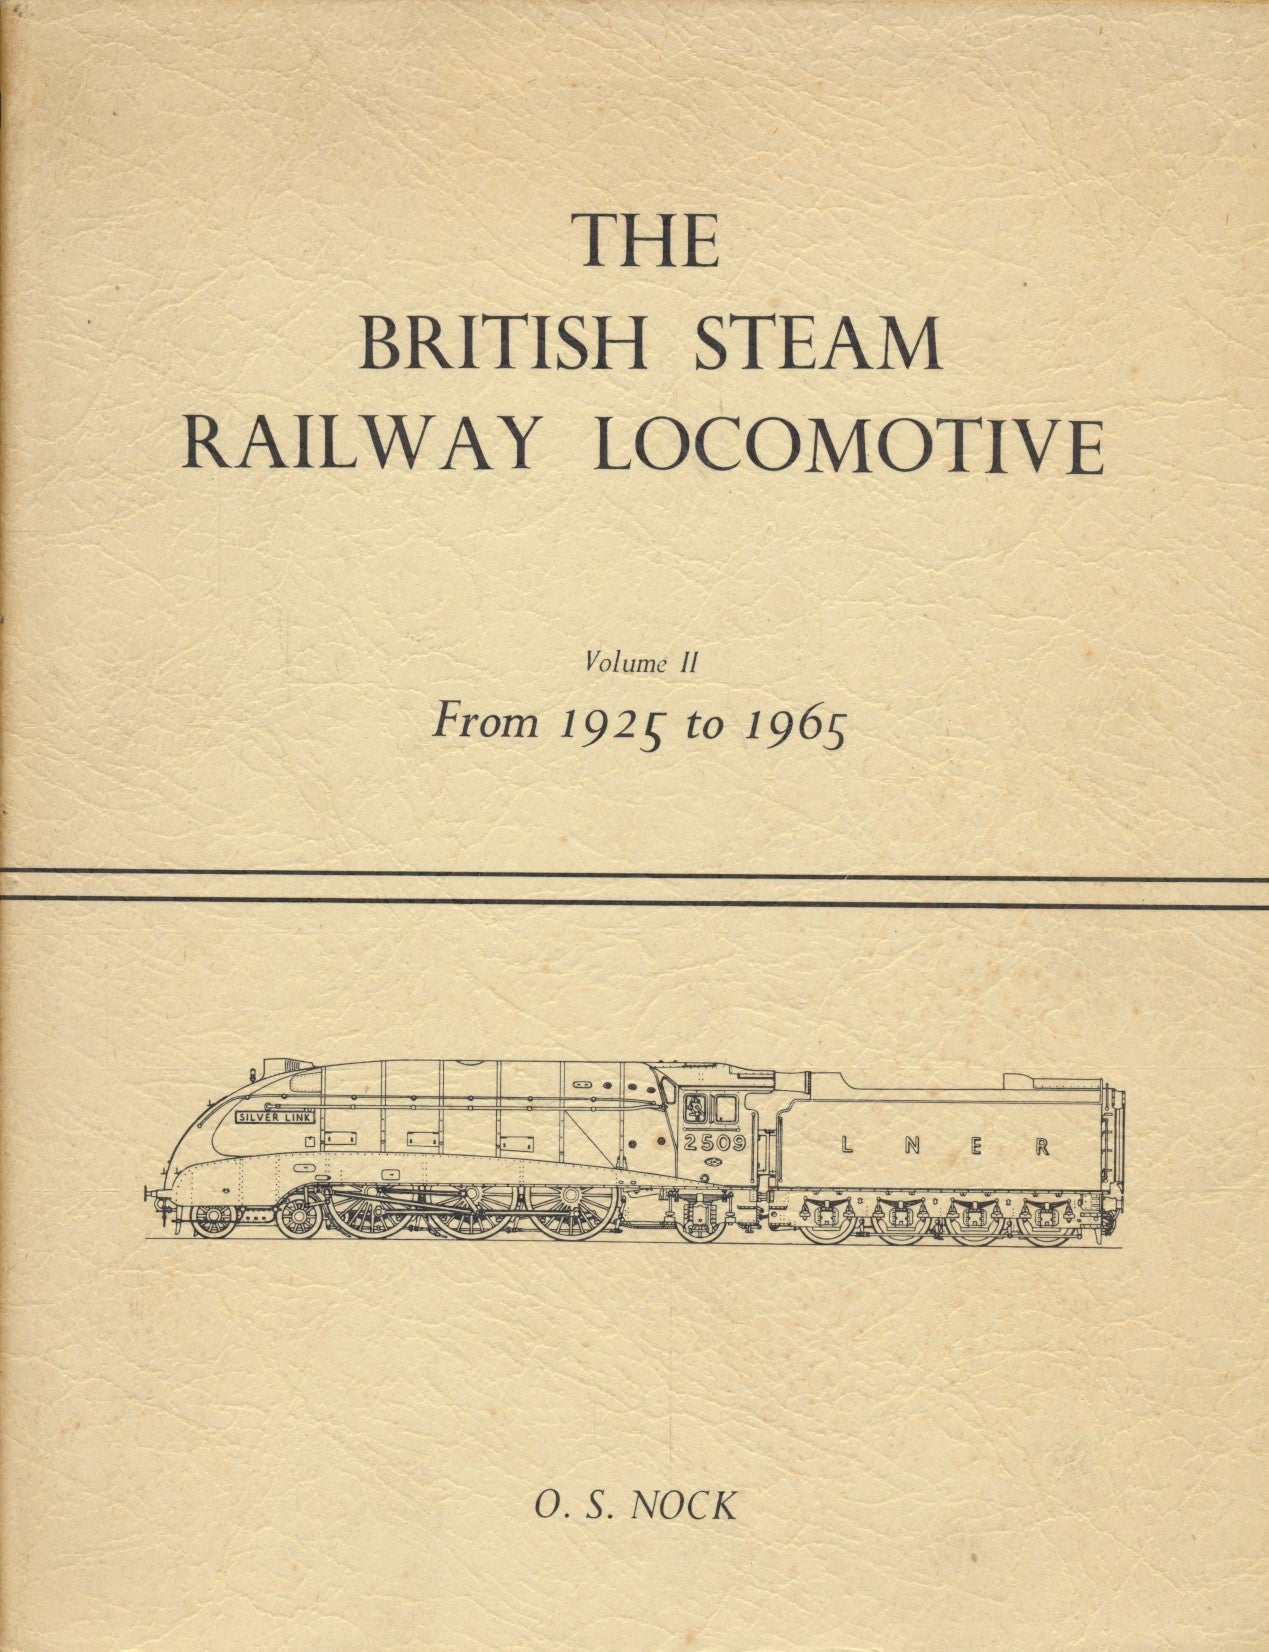 The British Steam Railway Locomotive 1925-1965 (1966 ed)